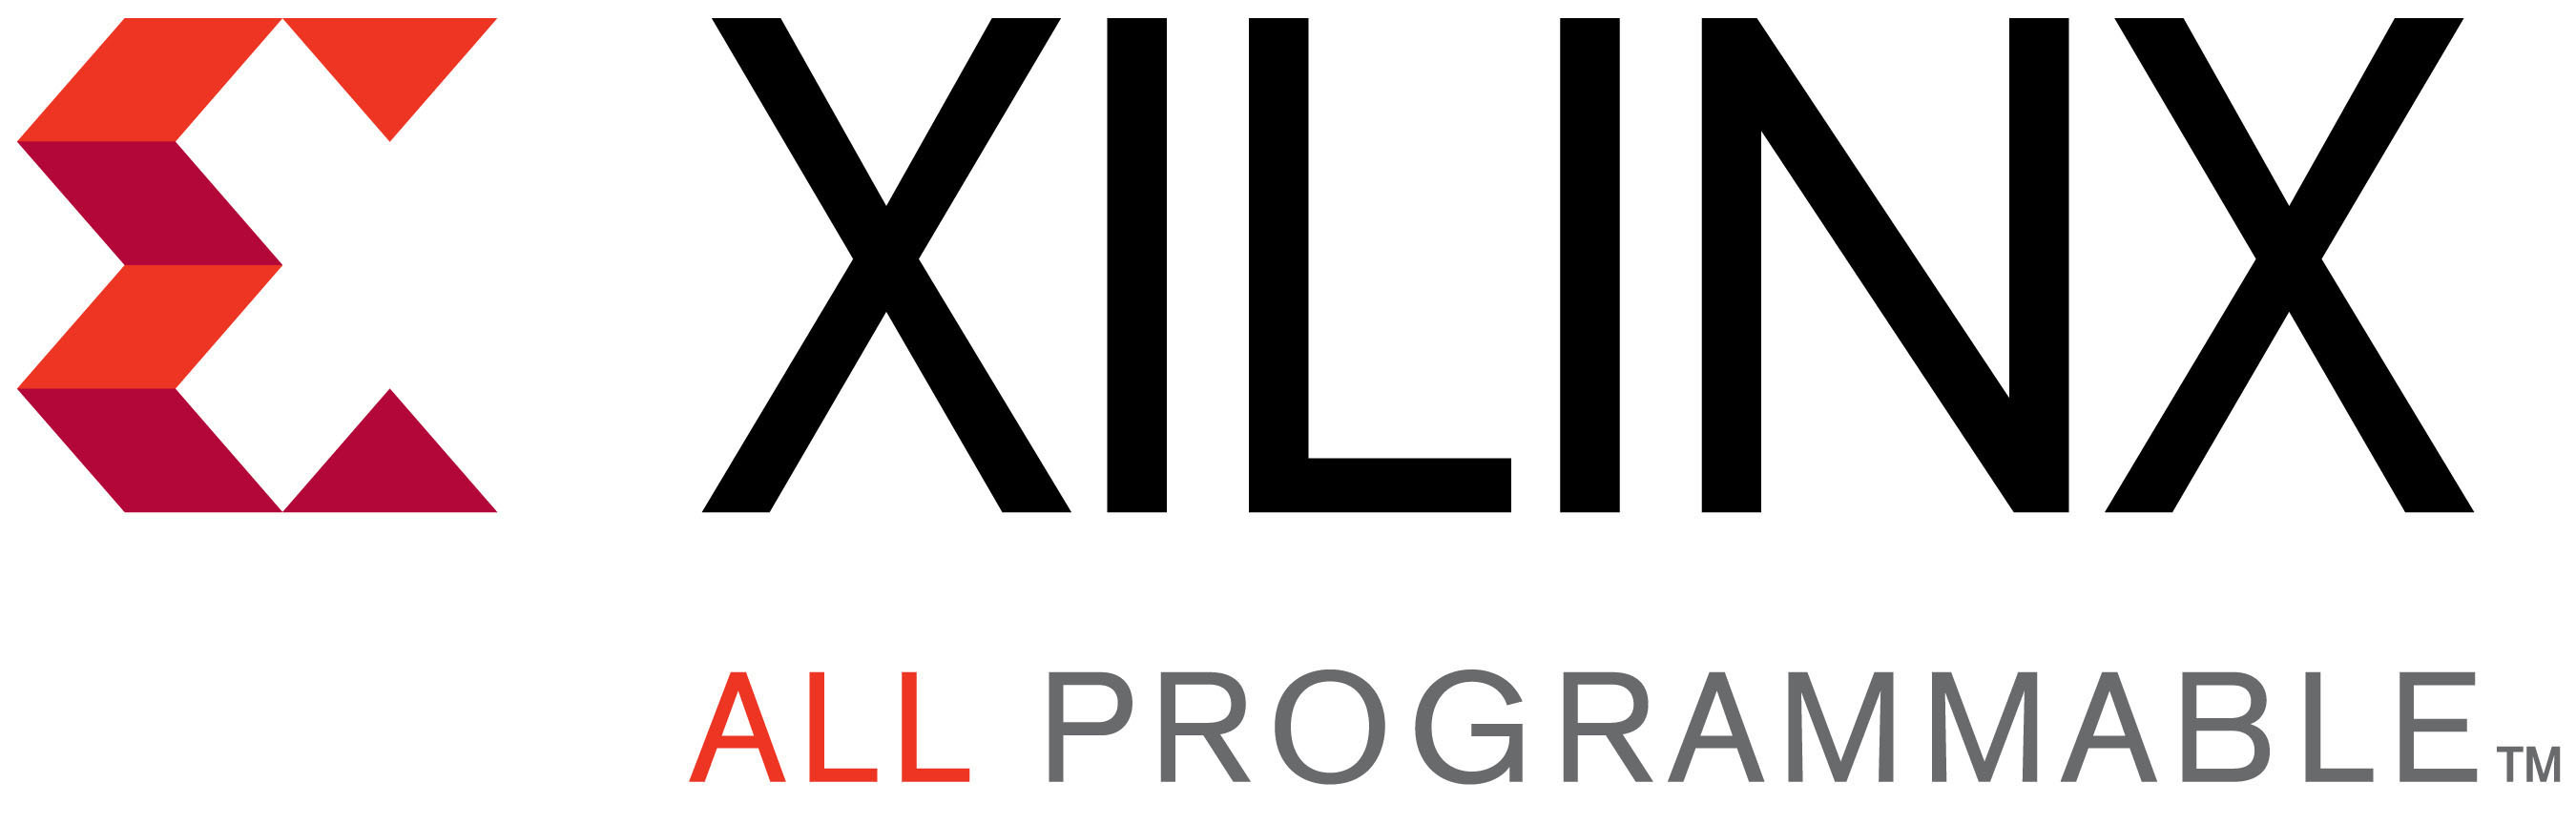 Xilinx is the worldwide leader of programmable logic solutions. (PRNewsFoto/Xilinx)